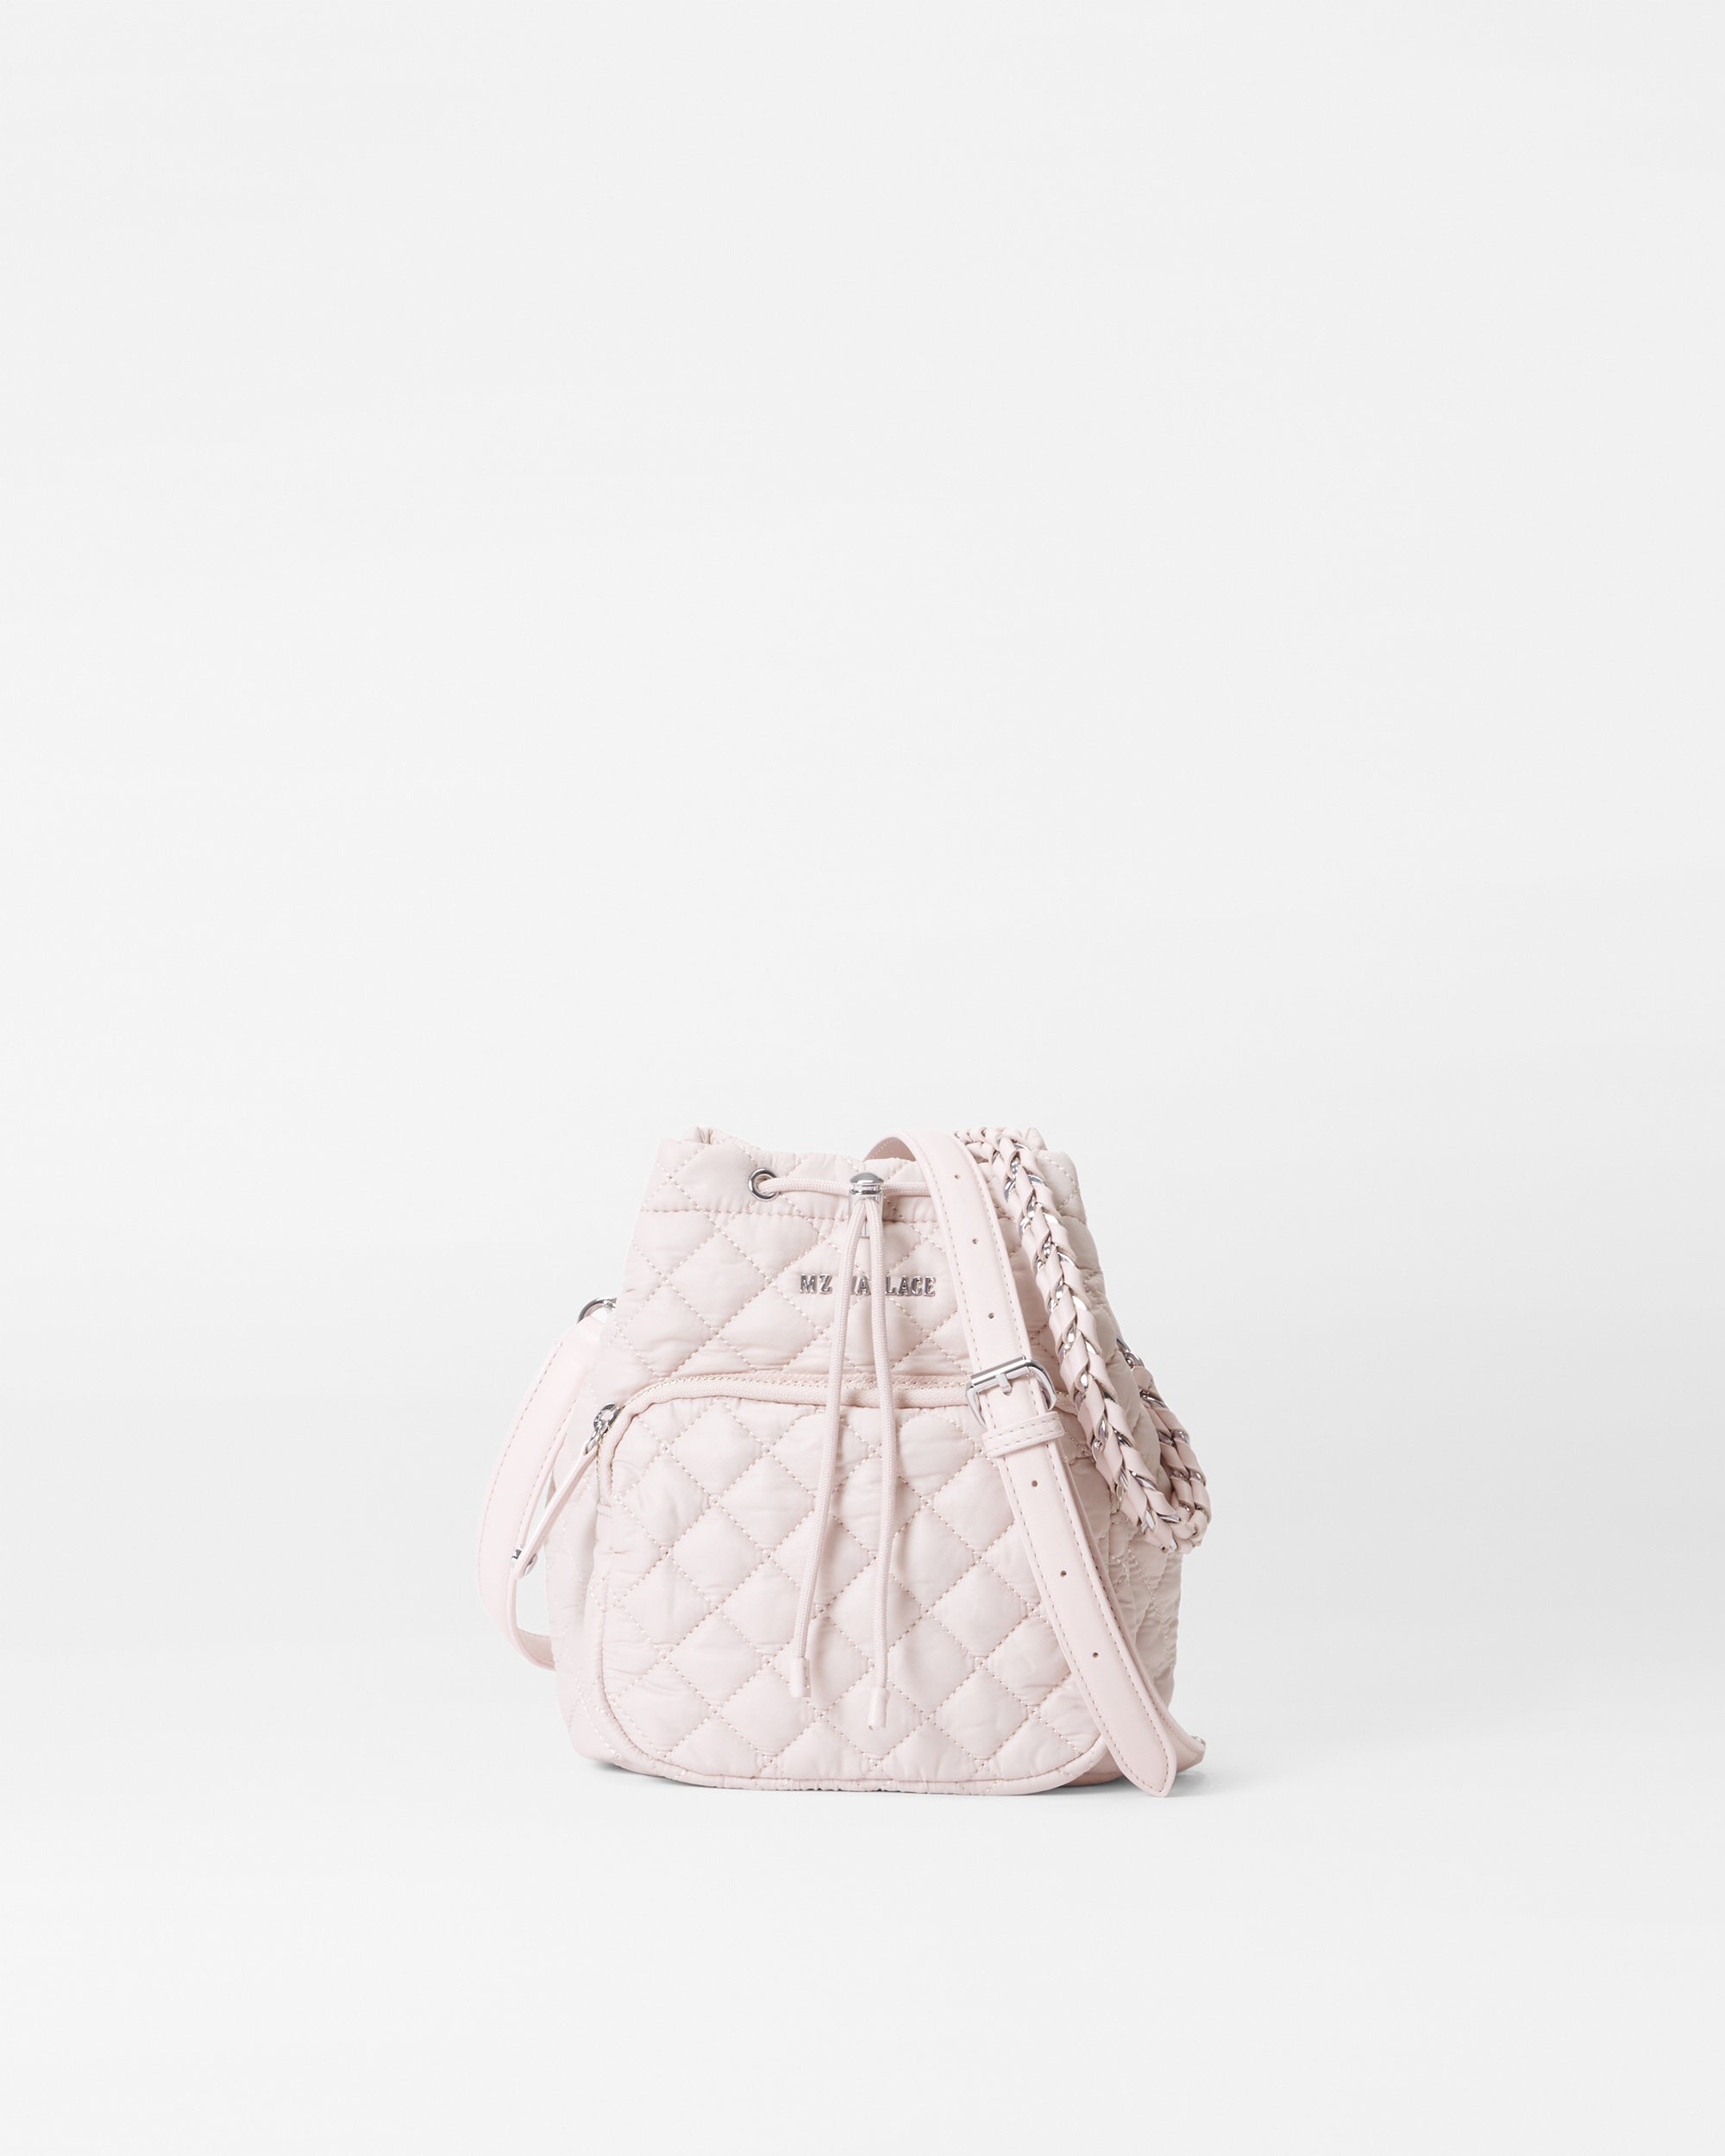 Bucket Bags for Women, Mini Bucket Bag Purses Soft Leather Crossbody Bucket  Bags Drawstring Handbags Boho Bag